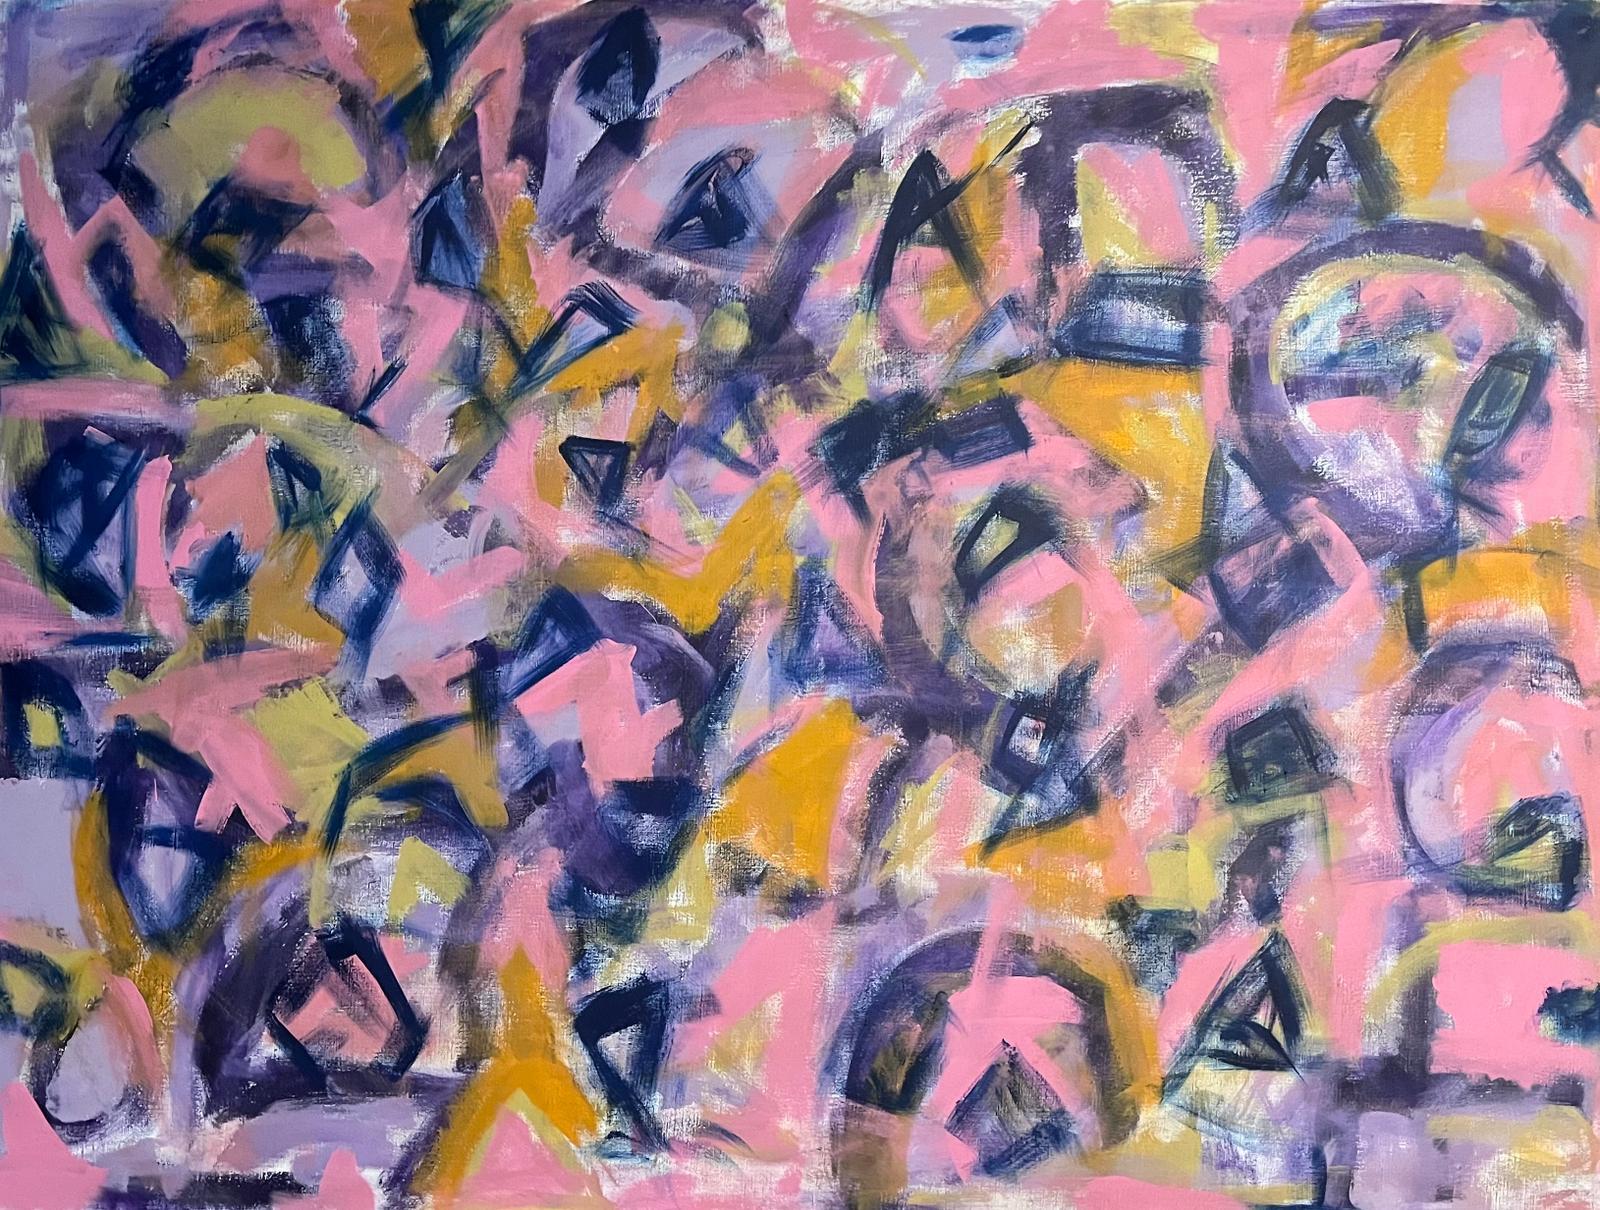 Abstract Painting Sally Bradshaw - Immense peinture expressionniste abstraite rose, violette et orange Contemporary British